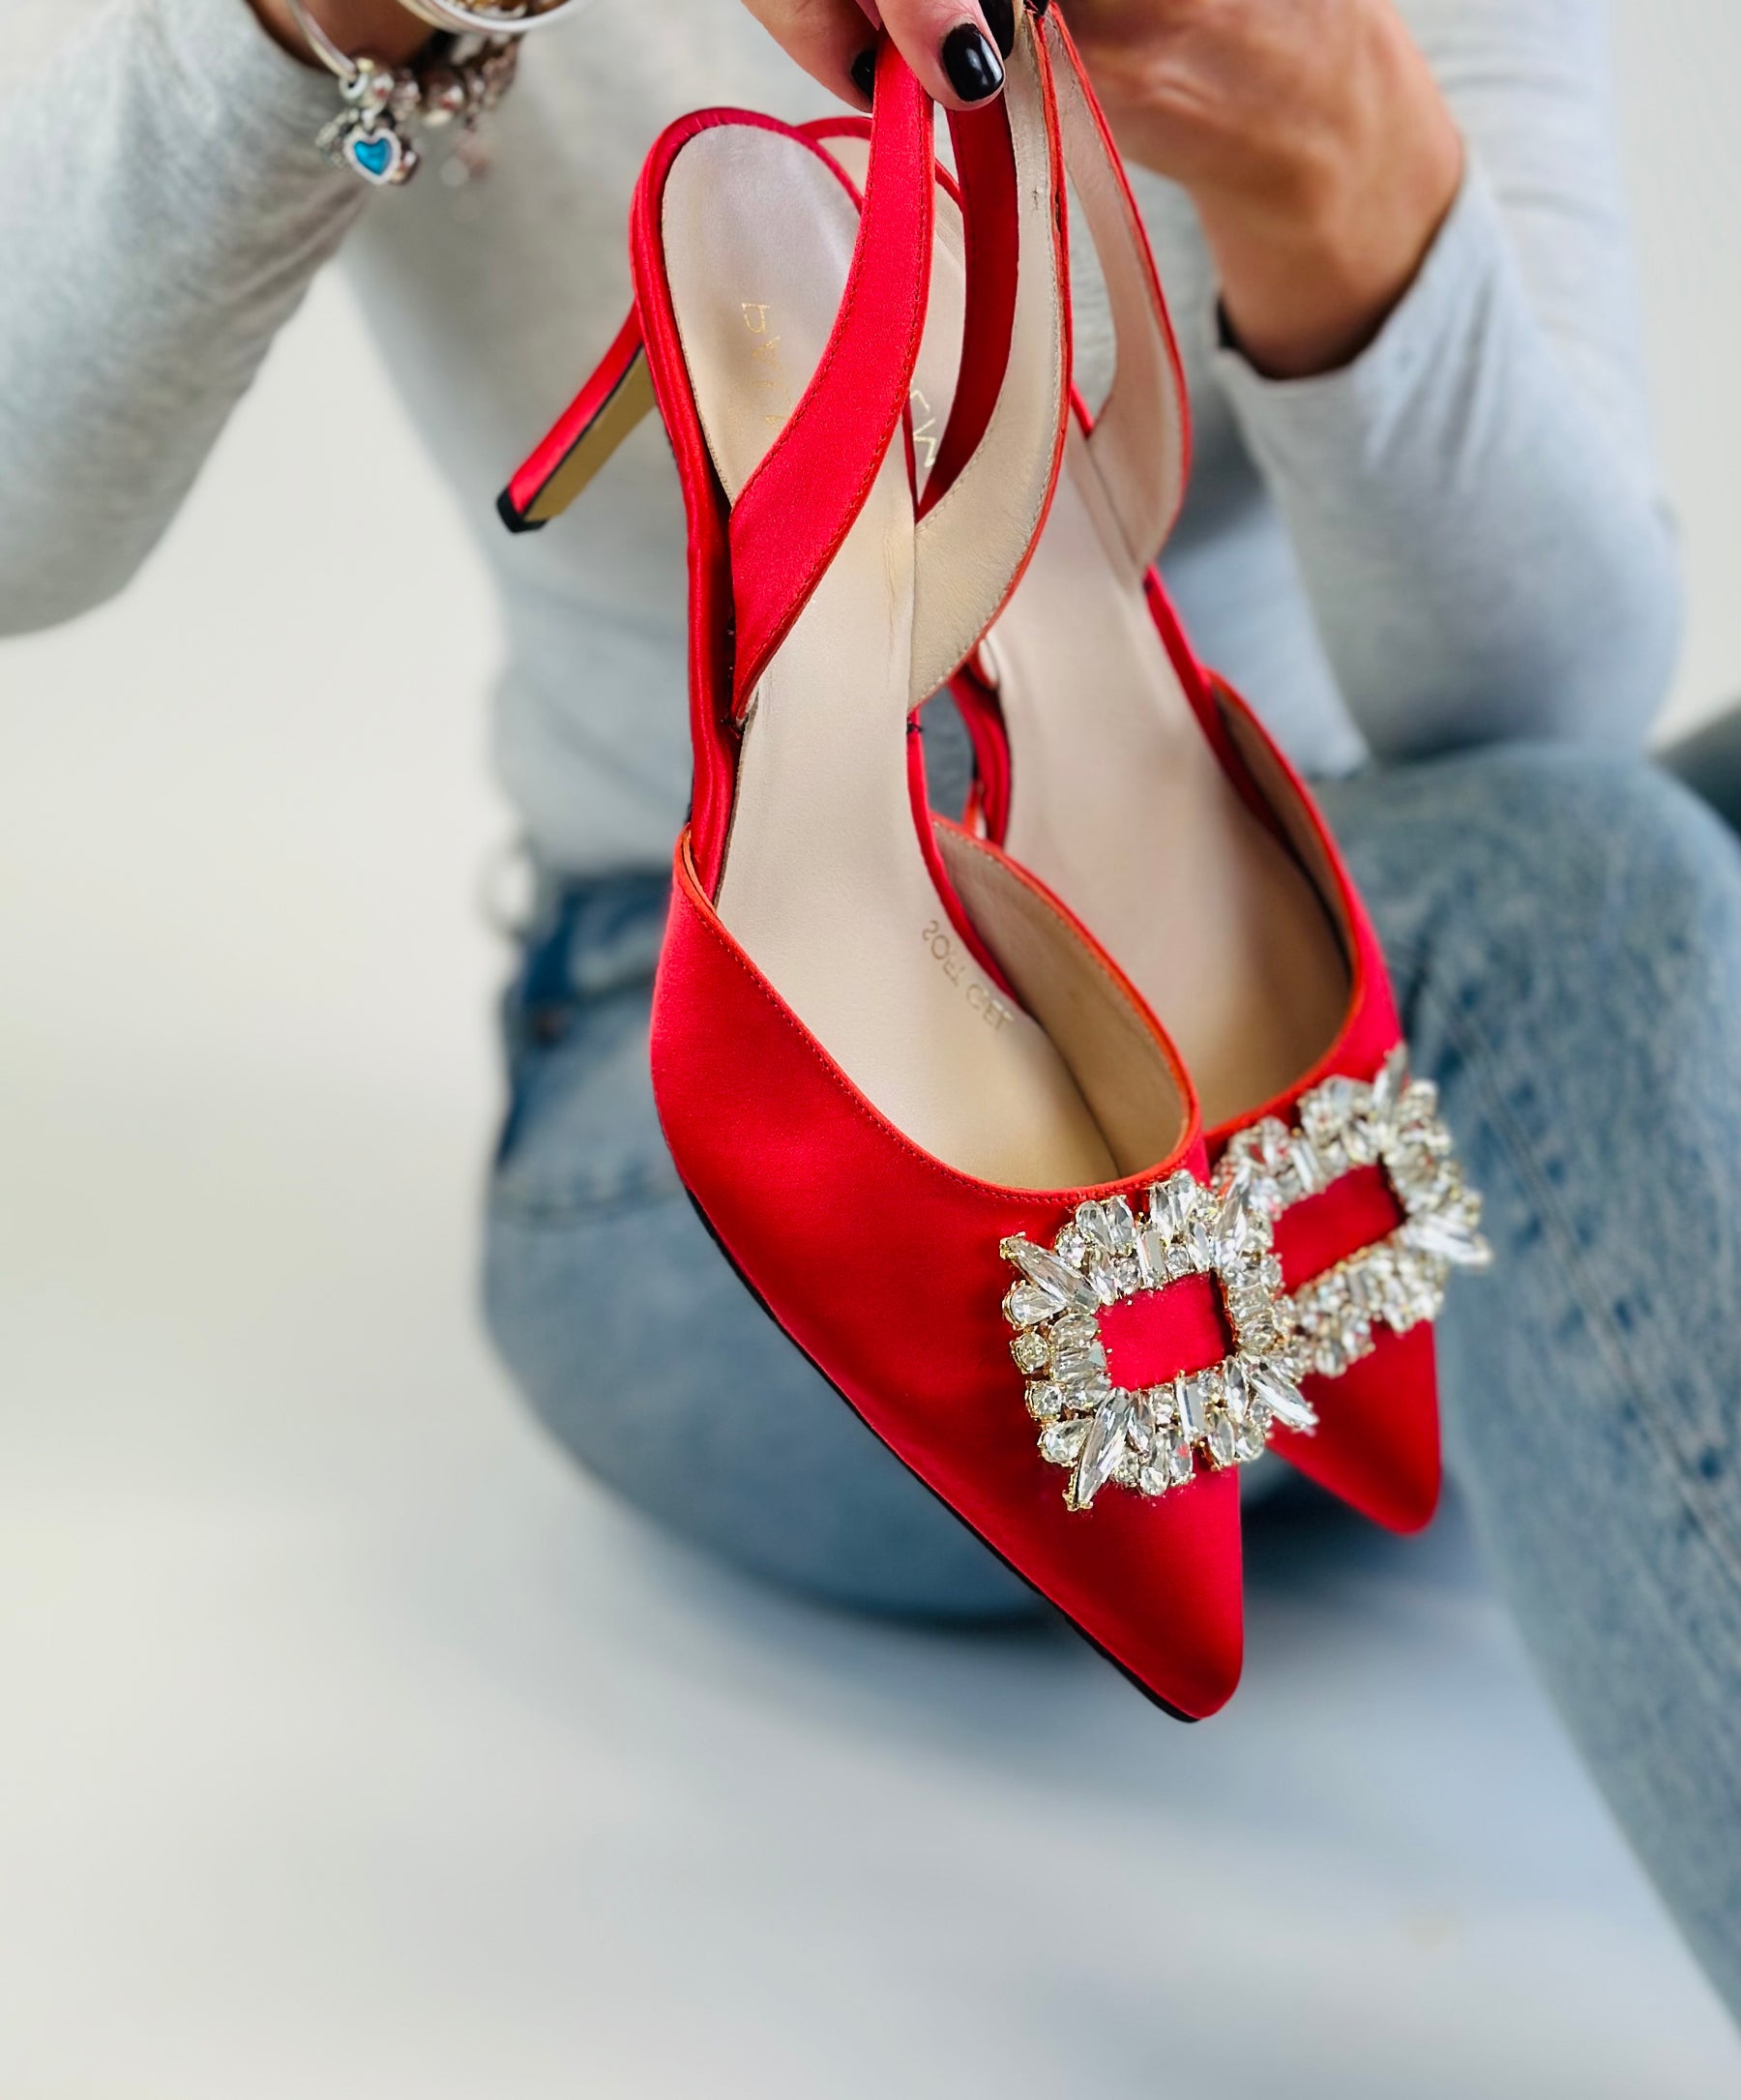 SAMPLE SALE Red sligback heels